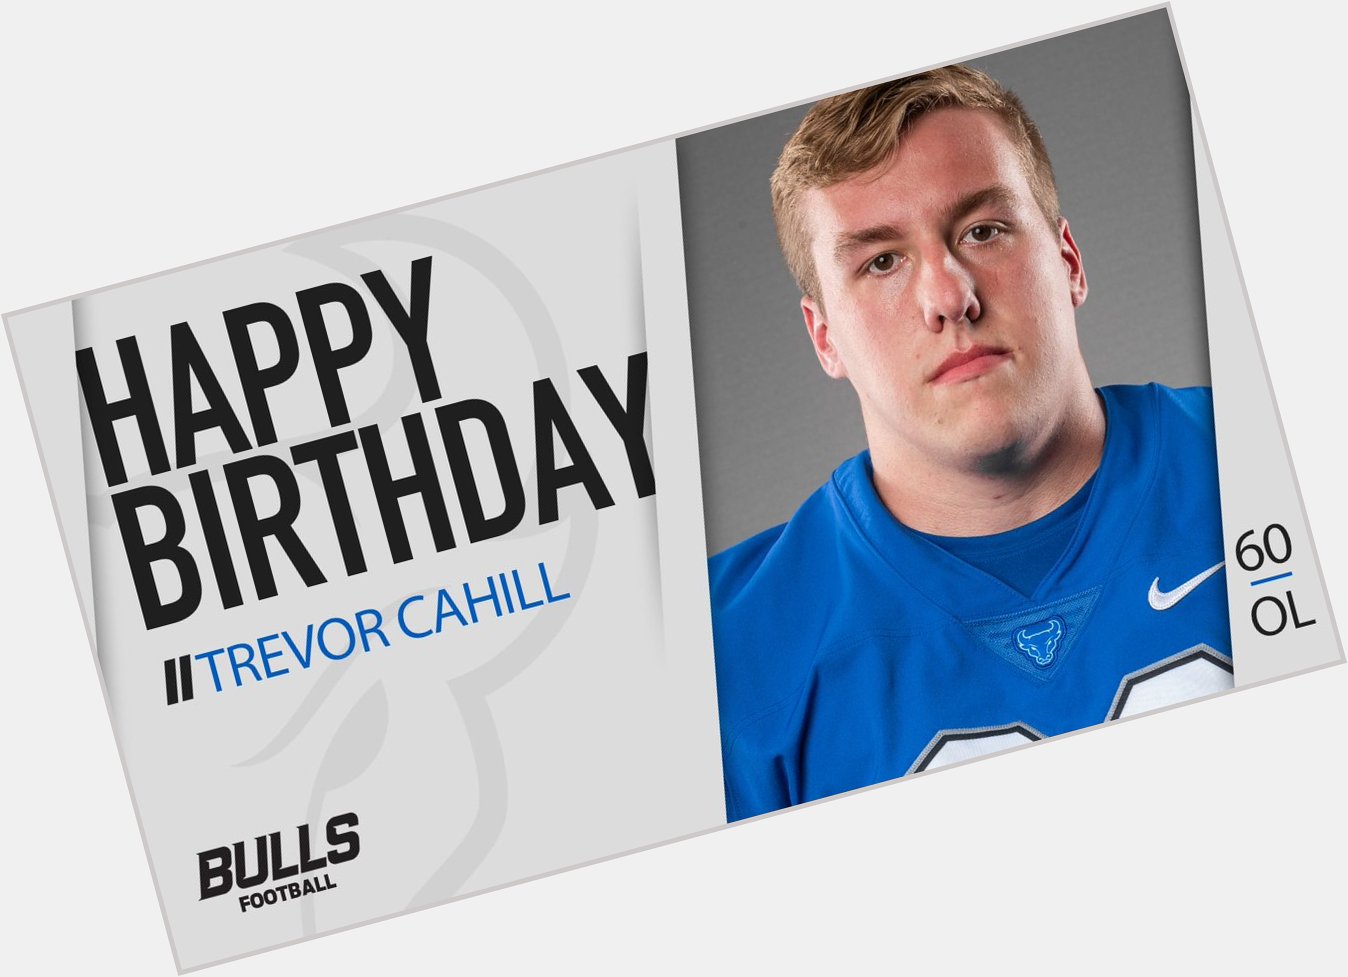 Happy Birthday to Bulls OL Trevor Cahill! I 